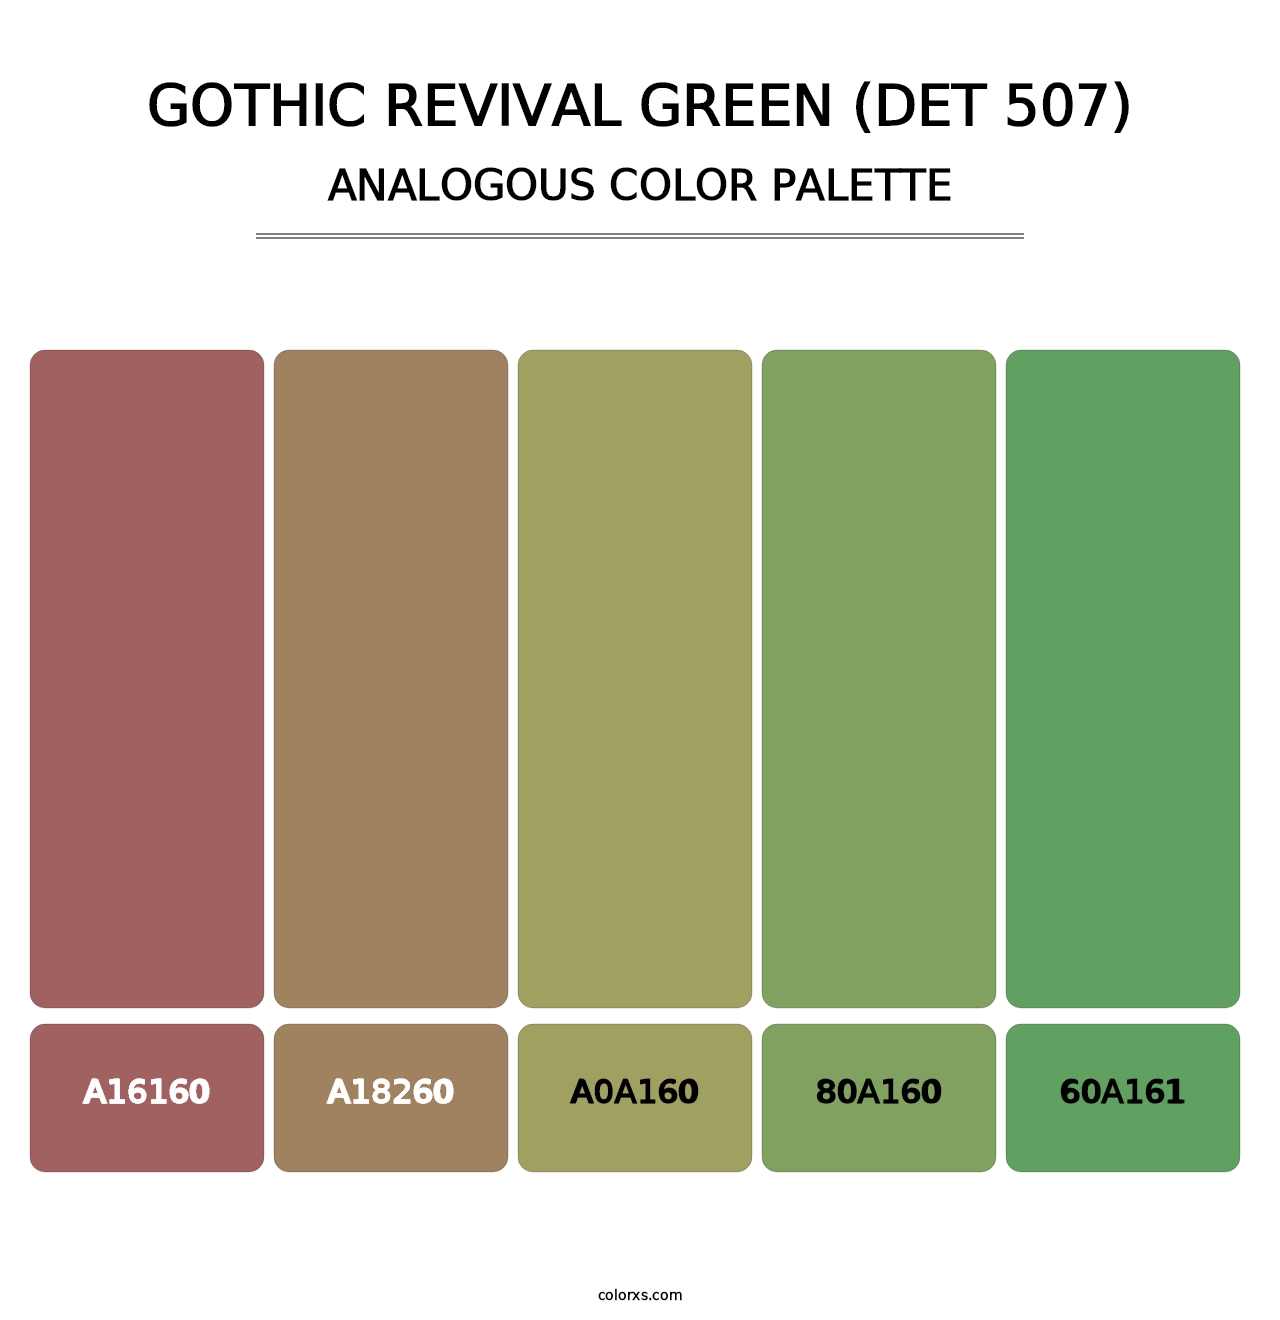 Gothic Revival Green (DET 507) - Analogous Color Palette